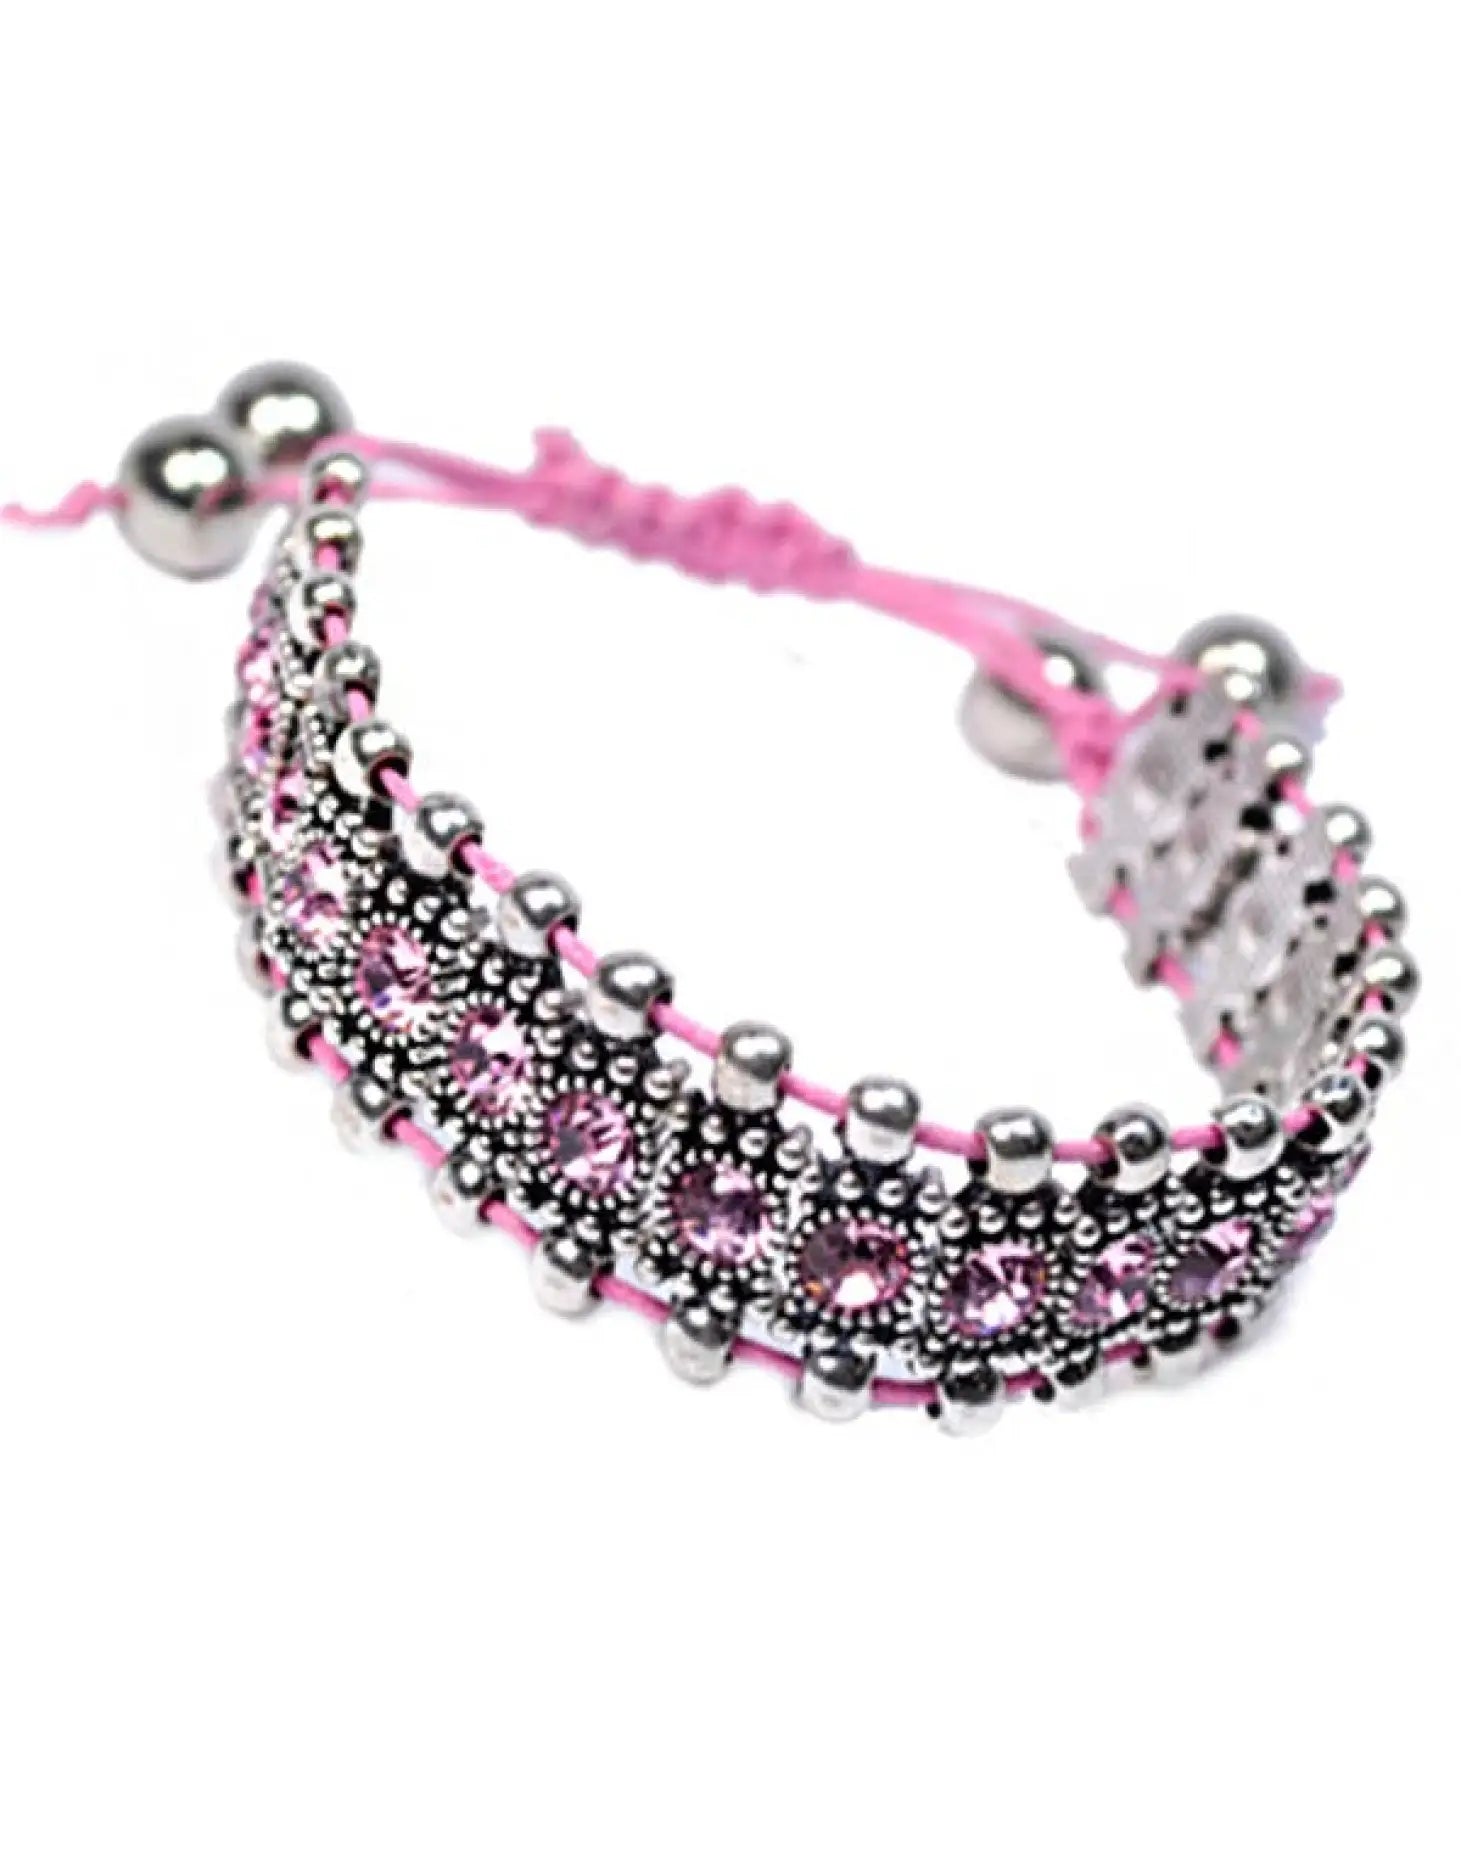 Pink and silver beaded elastic bracelet from 2 Pack Boho Rhinestone Sterling Elastic Bead Bracelets.